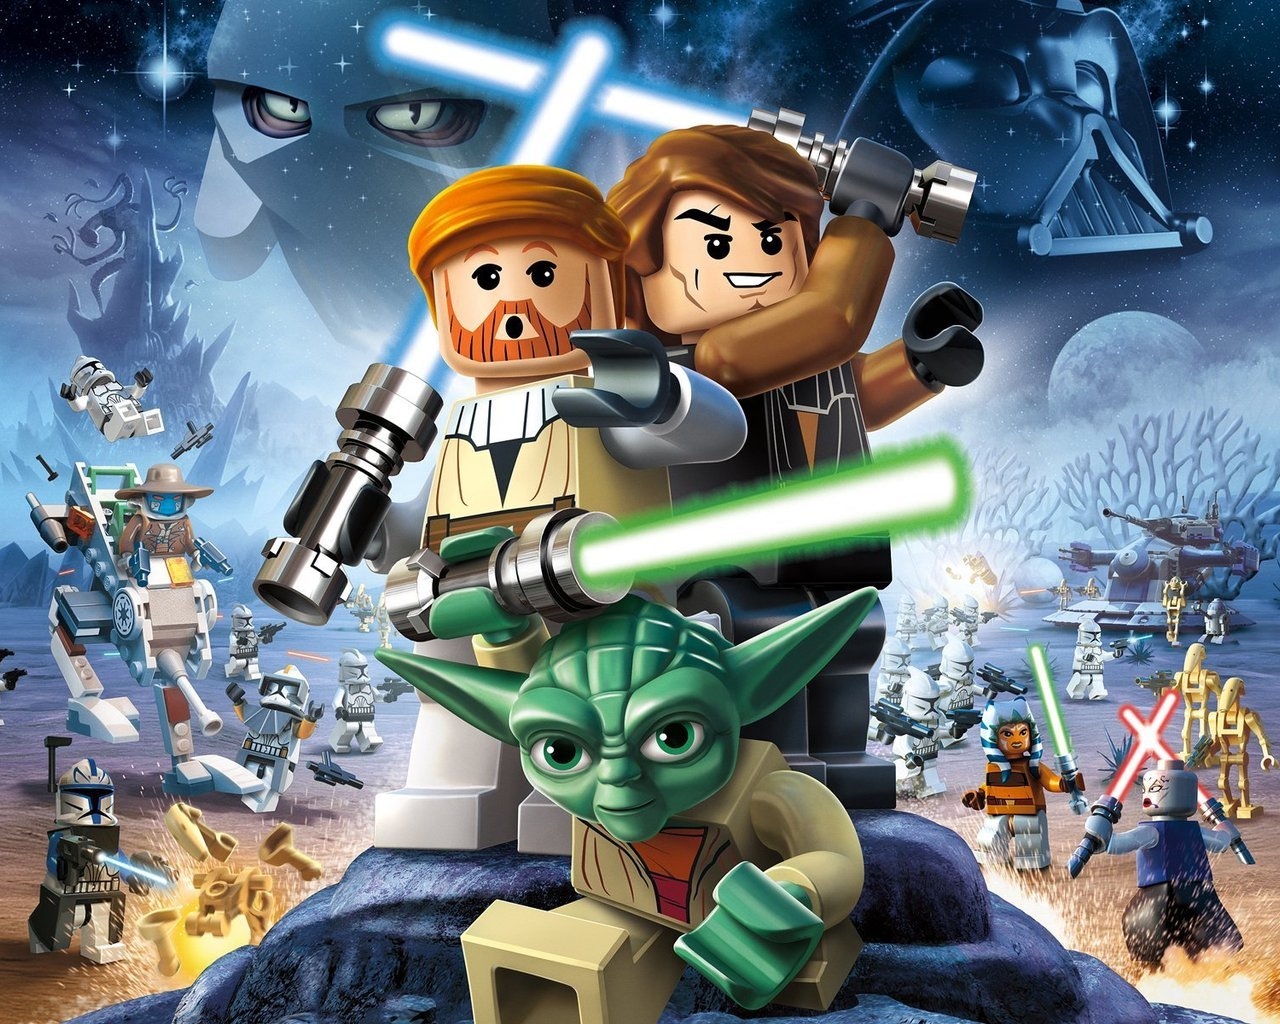 Lego Star Wars for 1280 x 1024 resolution